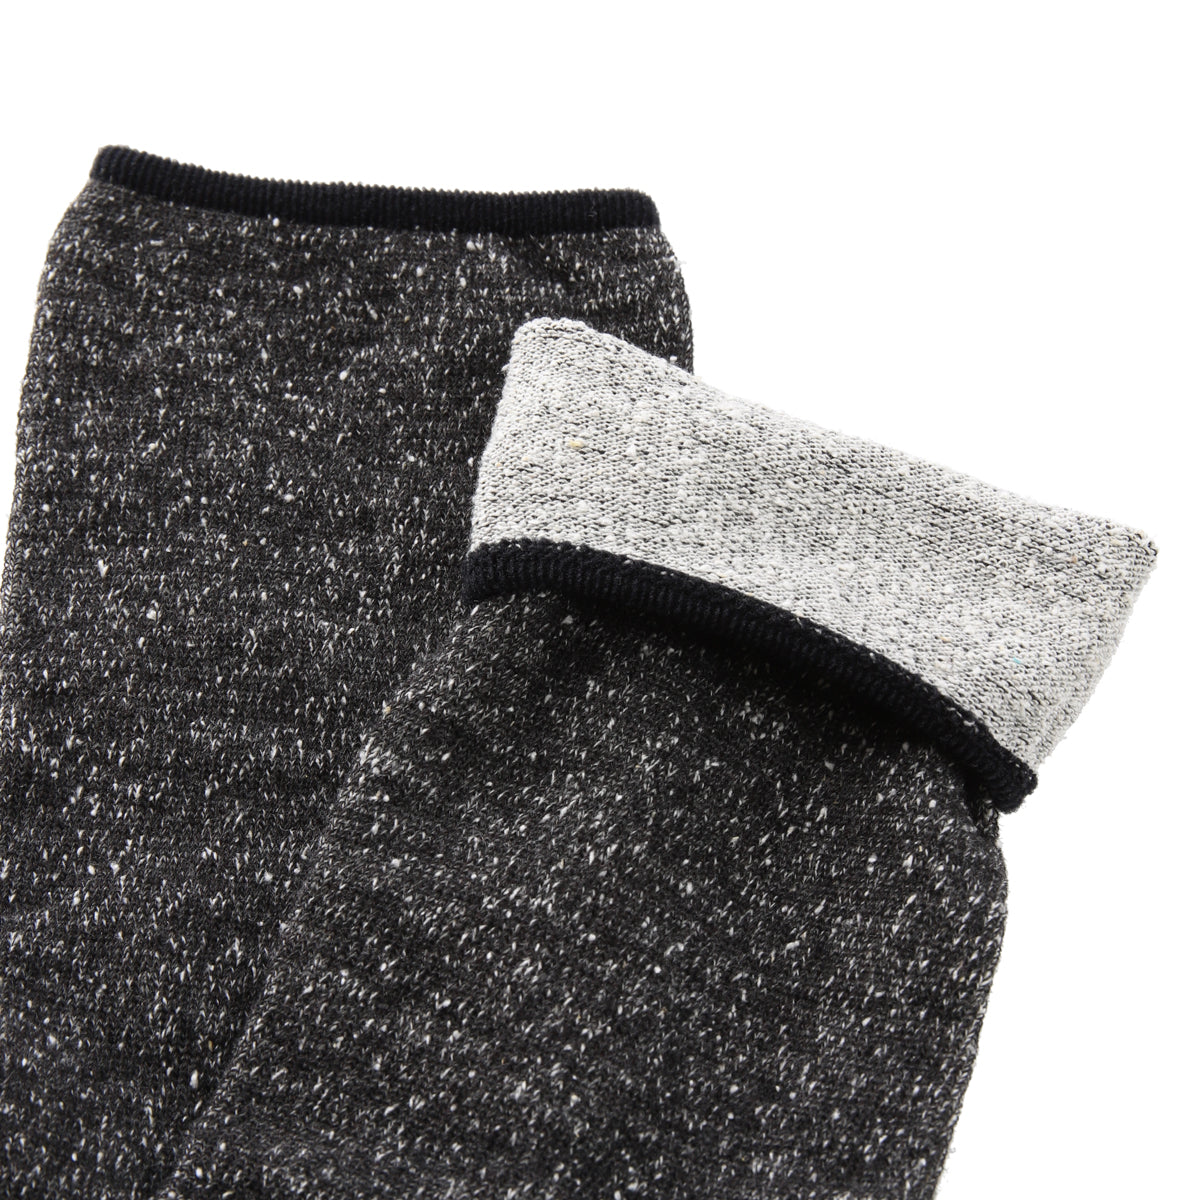 Silk and Cotton mixed socks (BLACK)